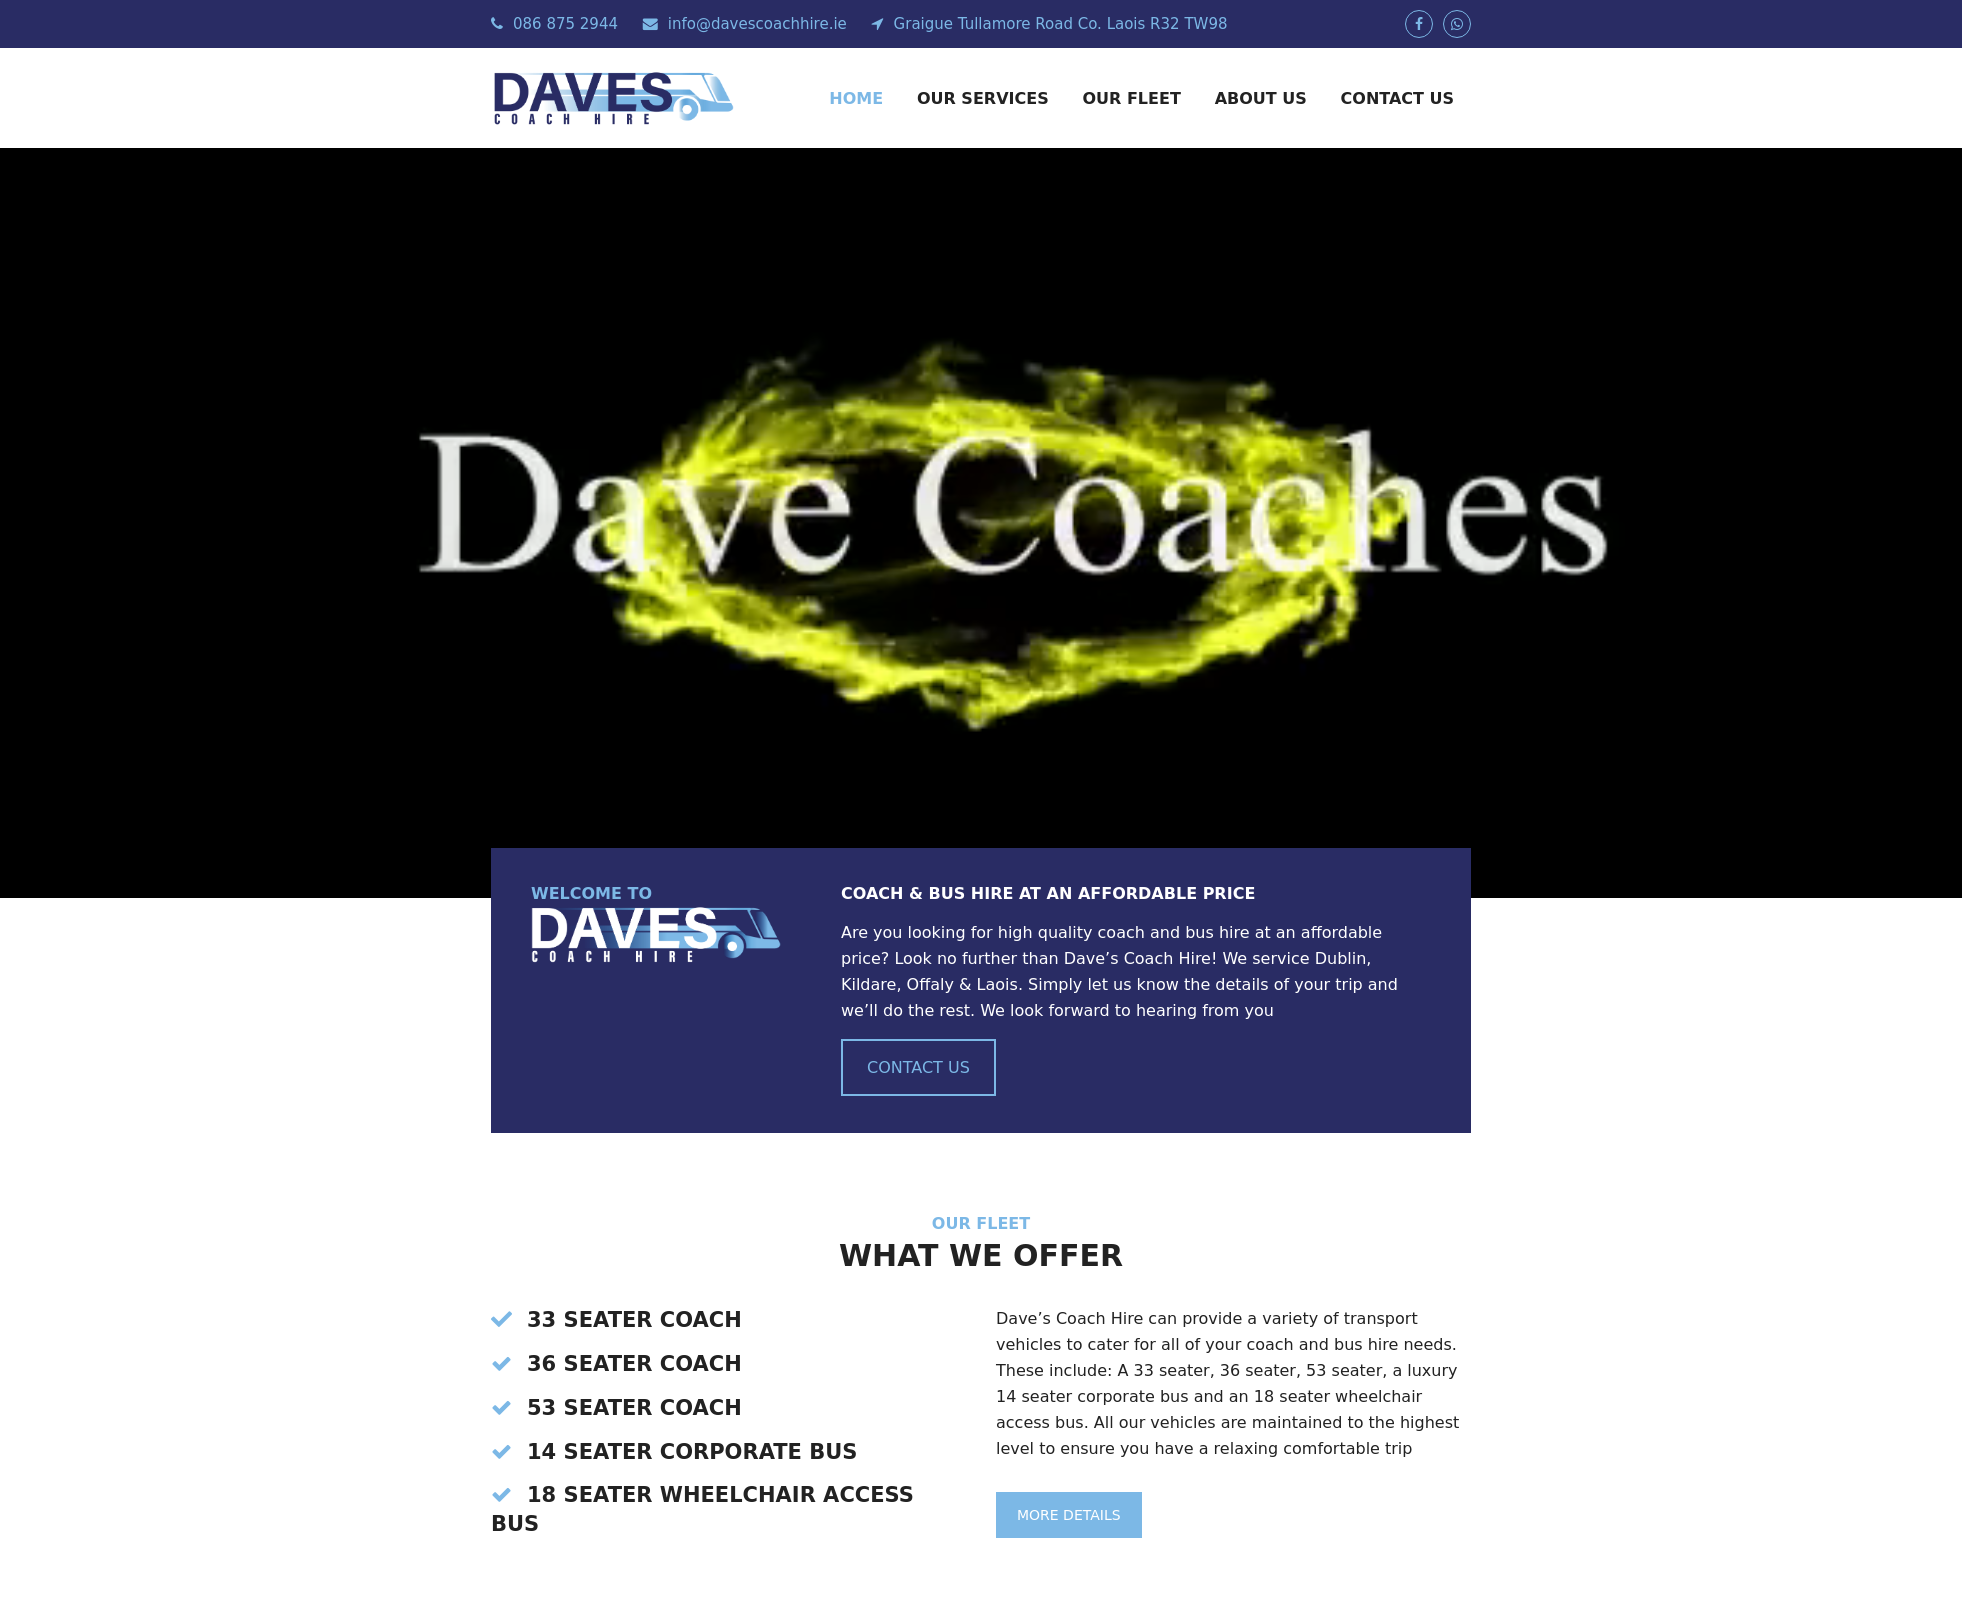 Dave's Coach Hire - Coach & Bus Hire Dublin, Kildare, Offaly, Laois - Jamorano Creative Digital